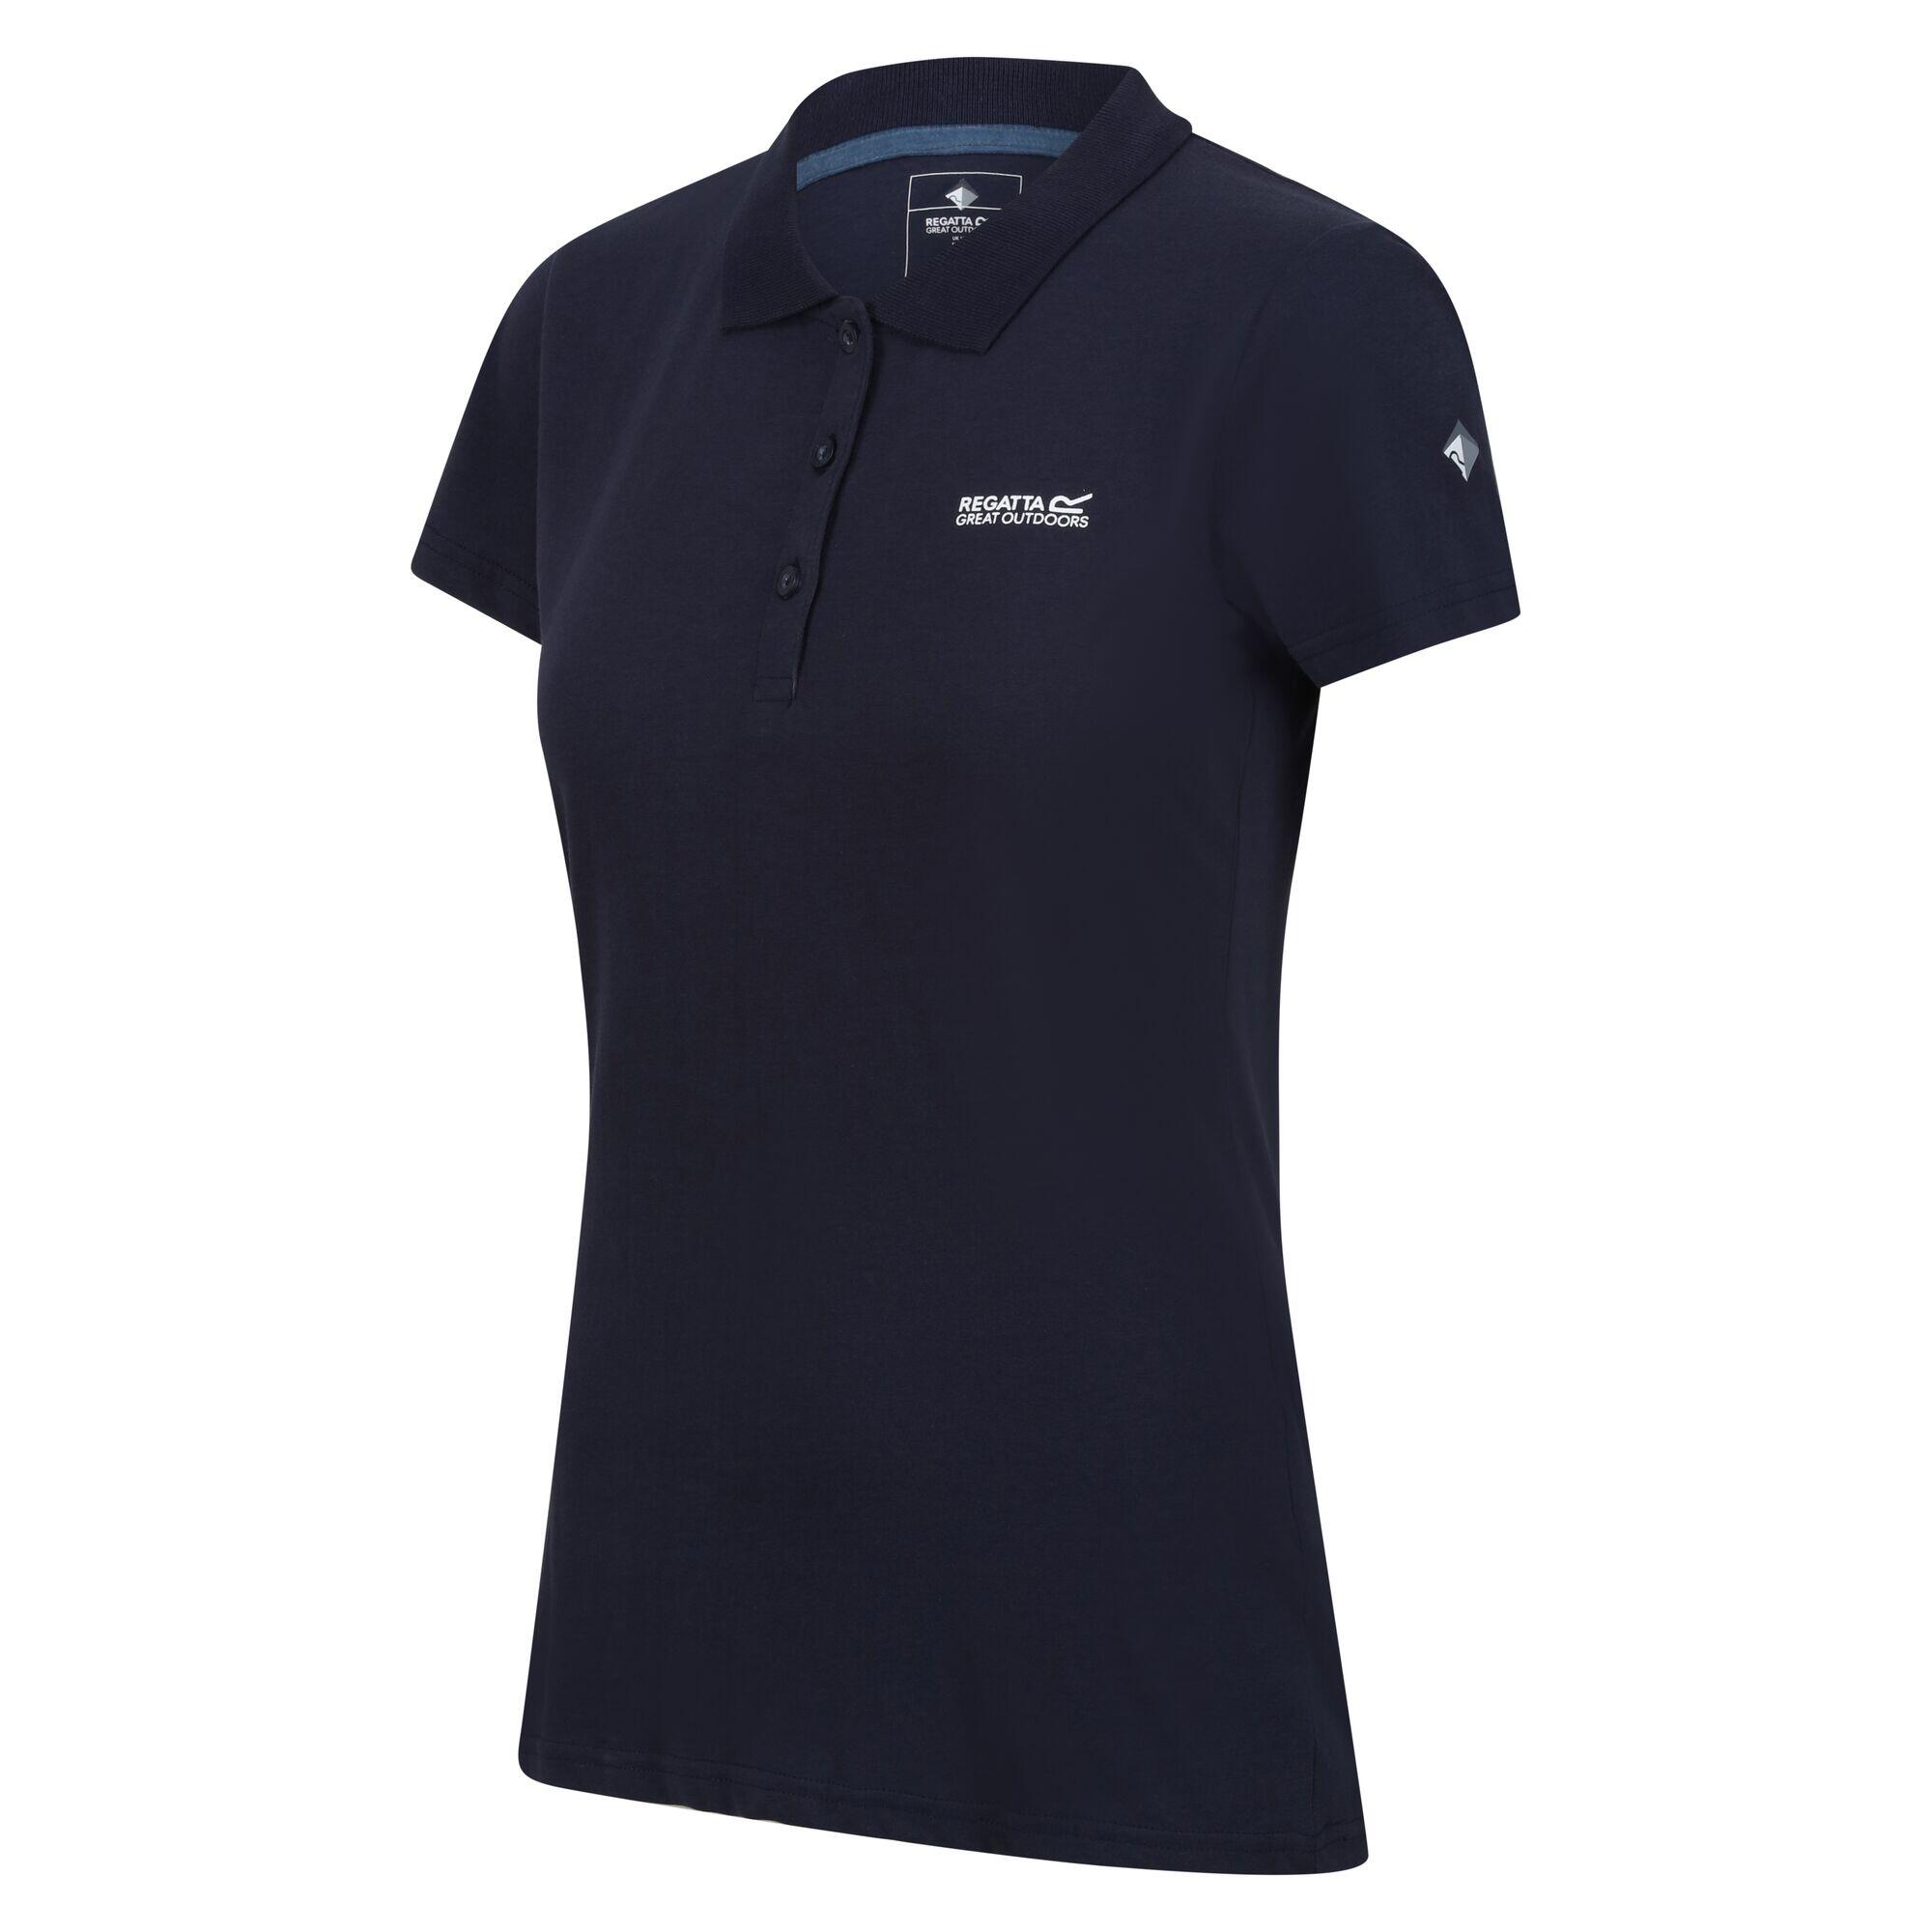 Sinton Women's Fitness Short Sleeve T-Shirt - Navy 5/5